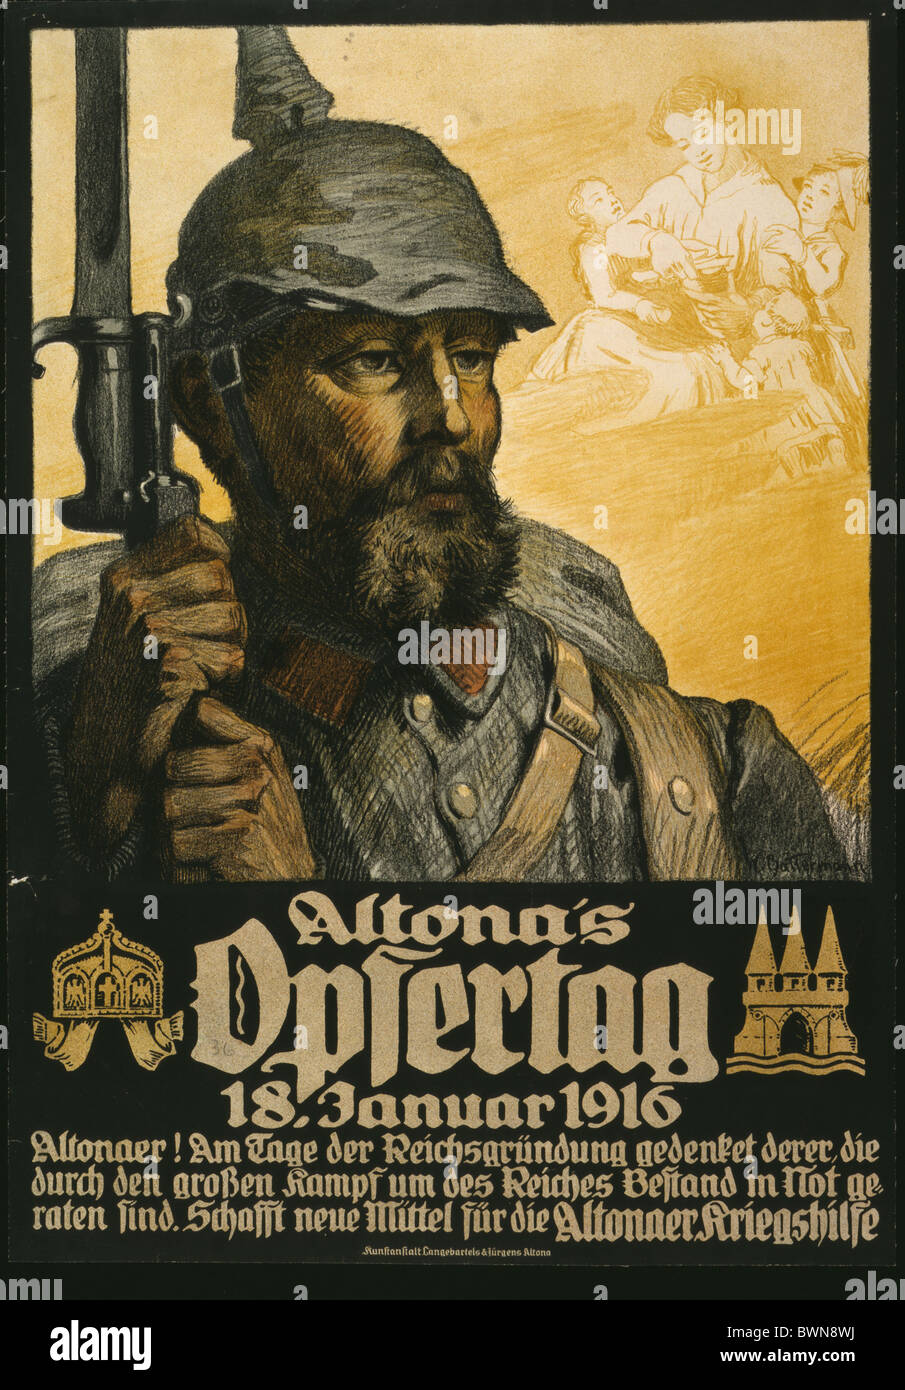 Ersten Weltkrieg Altona Opfertag Januar 18 1916 Poster deutscher Soldat; Altoners tragen Krieg Hilfe Altona bietet Stockfoto